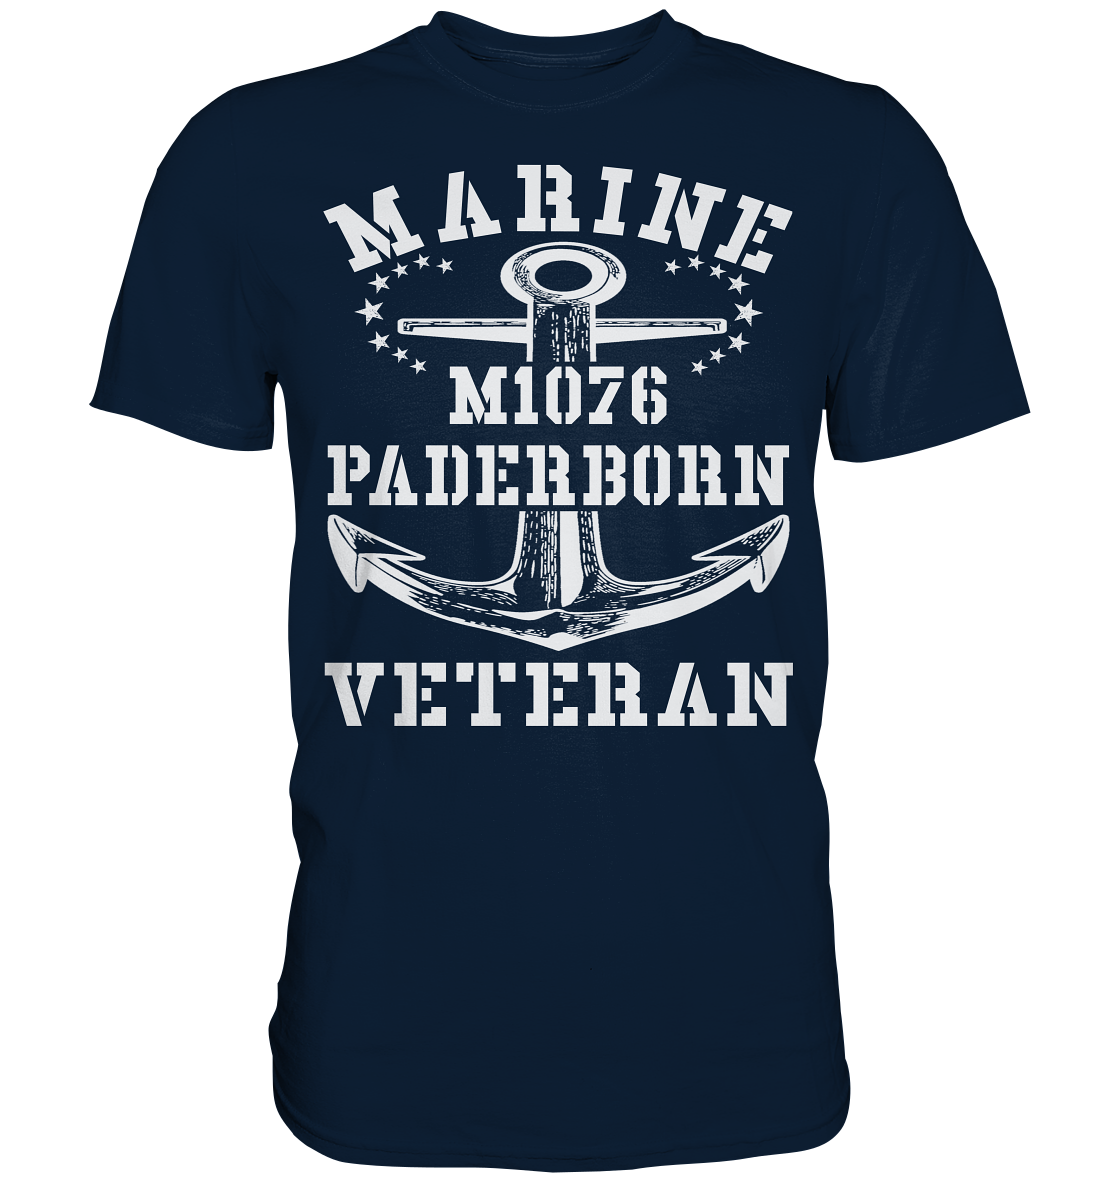 MARINE VETERAN M1076 PADERBORN - Premium Shirt